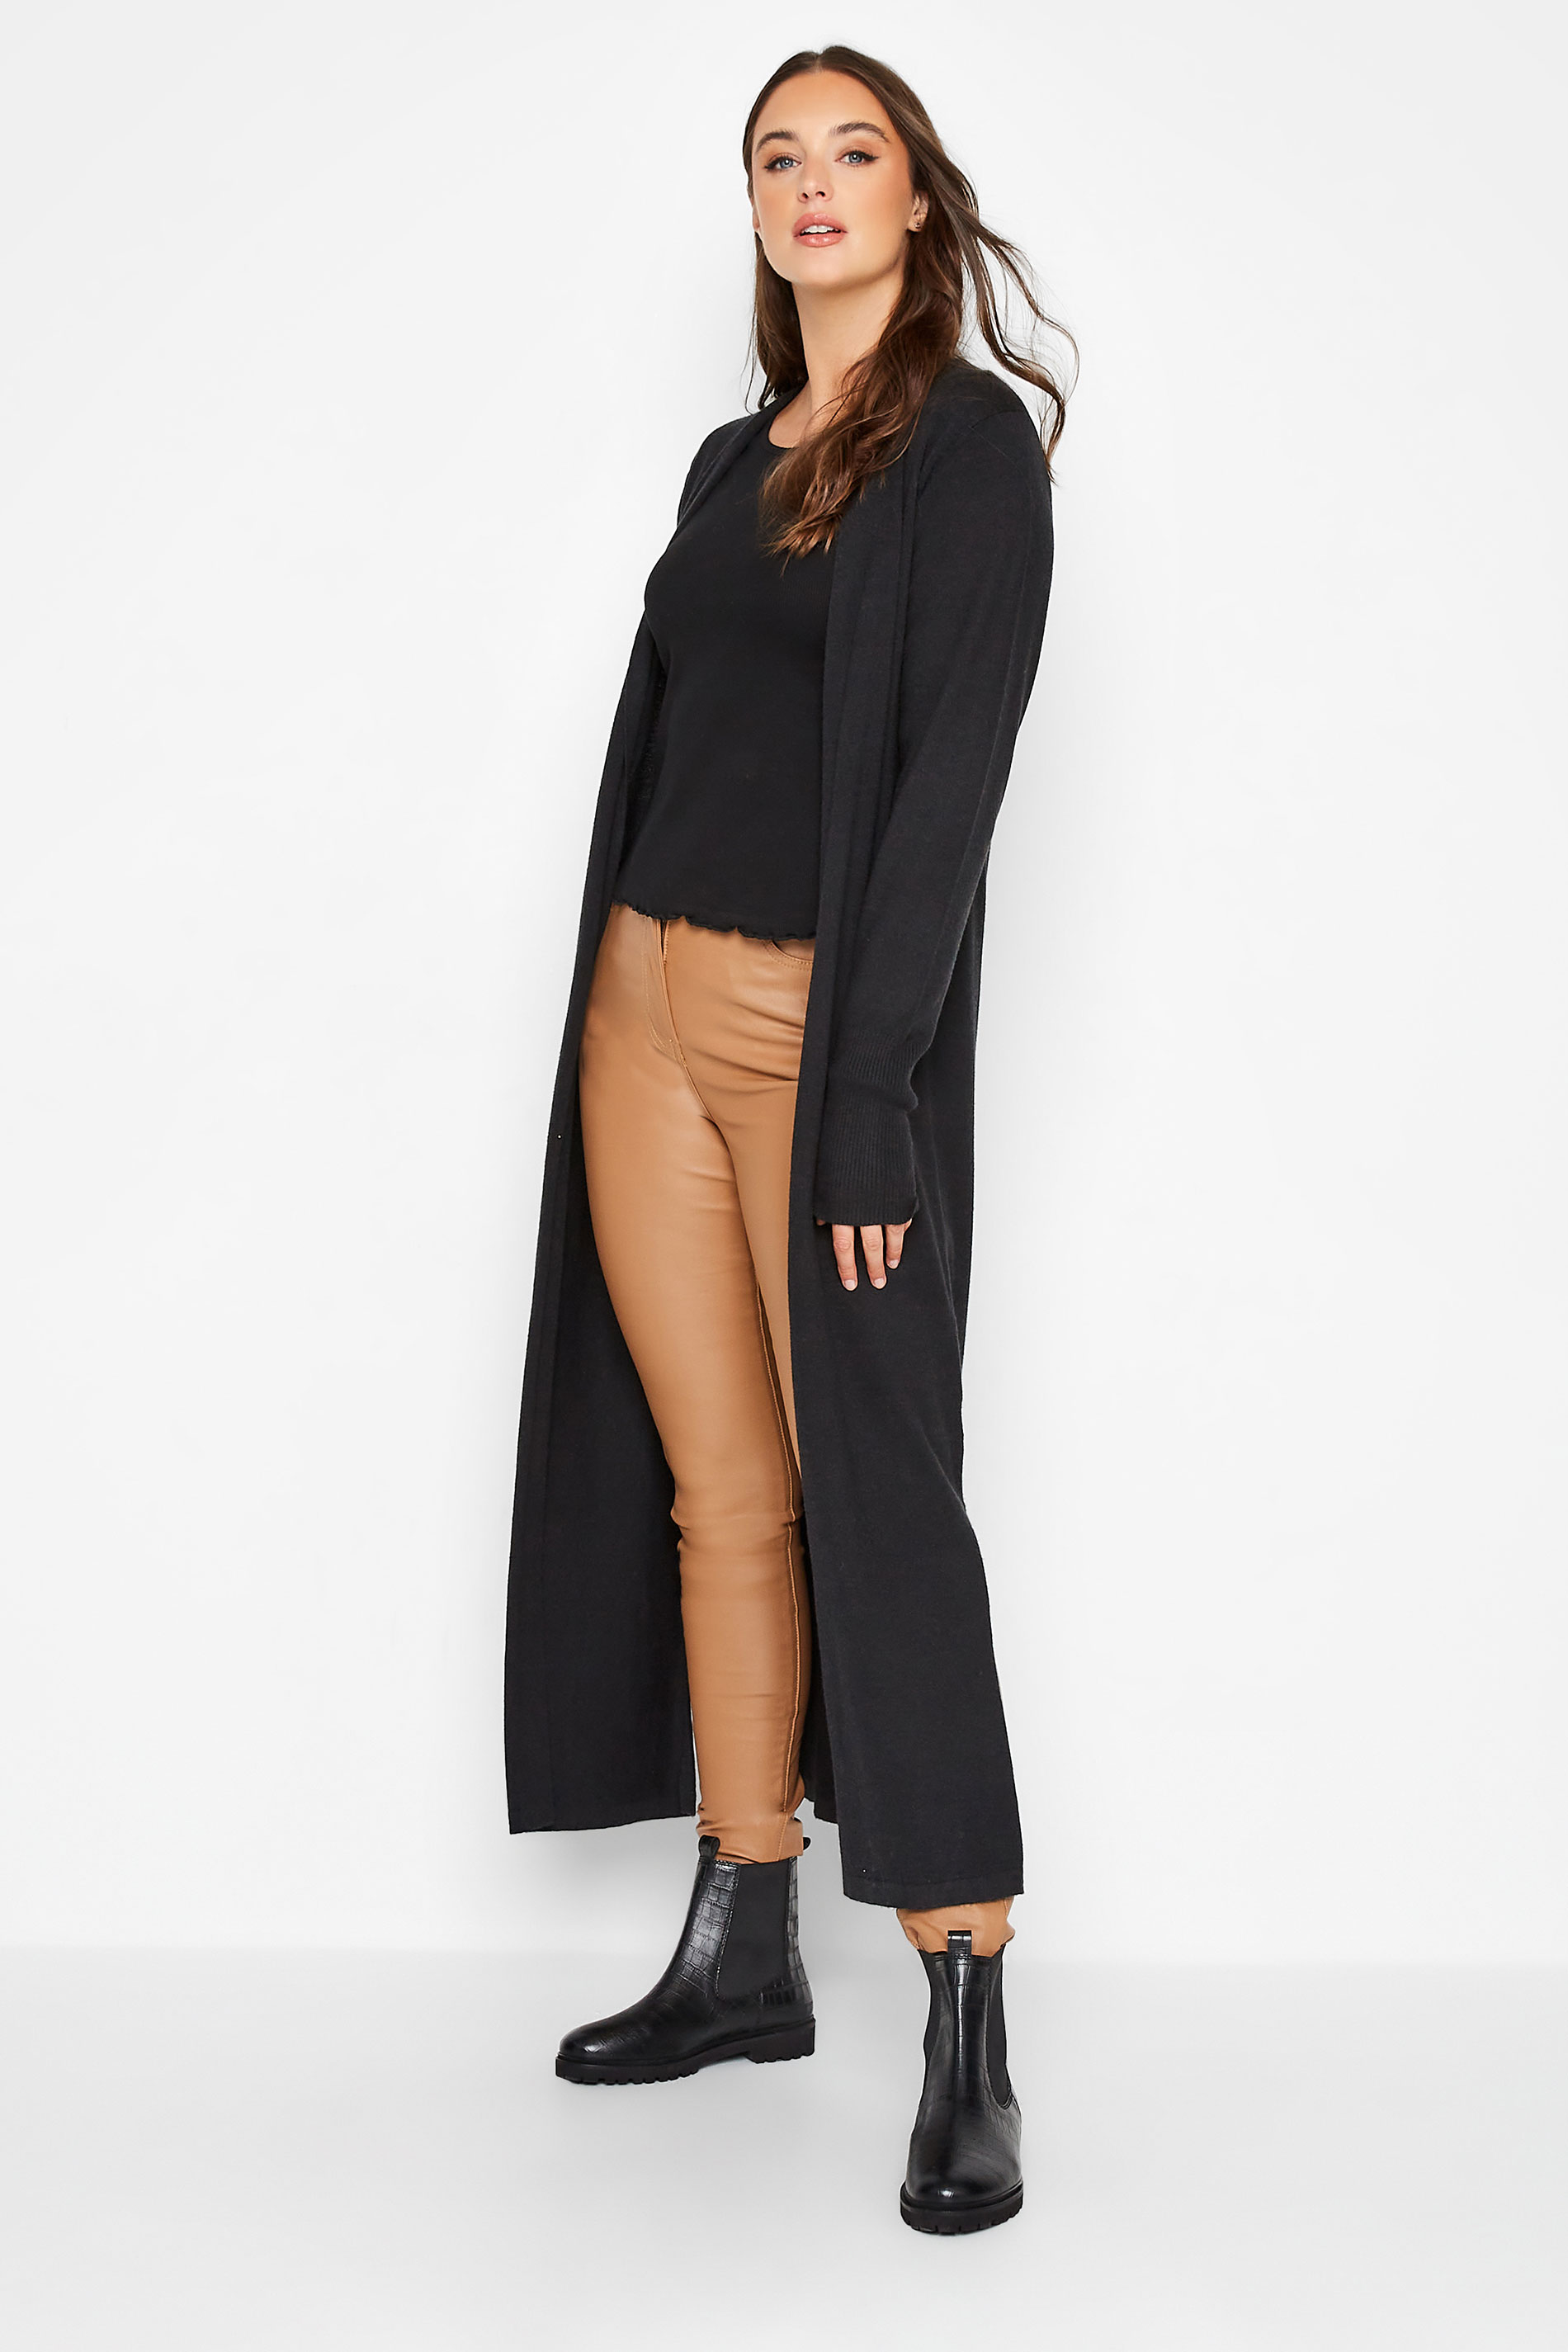 LTS Tall Black Long Sleeve Maxi Cardigan 1